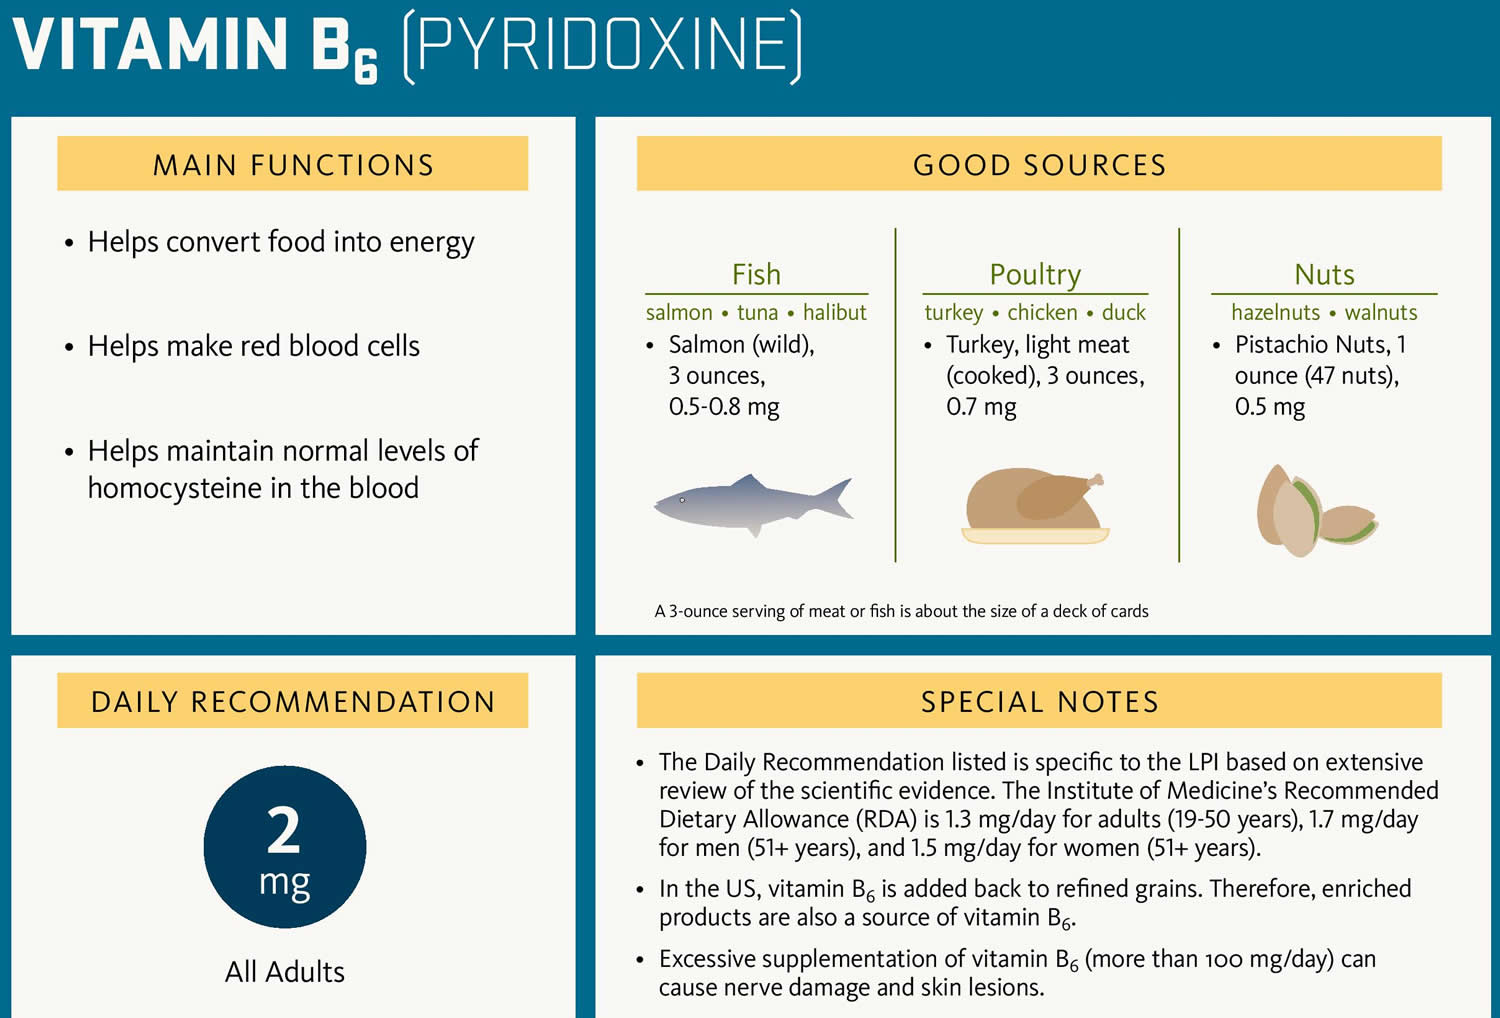 Pyridoxine vitamin B6 rich food sources